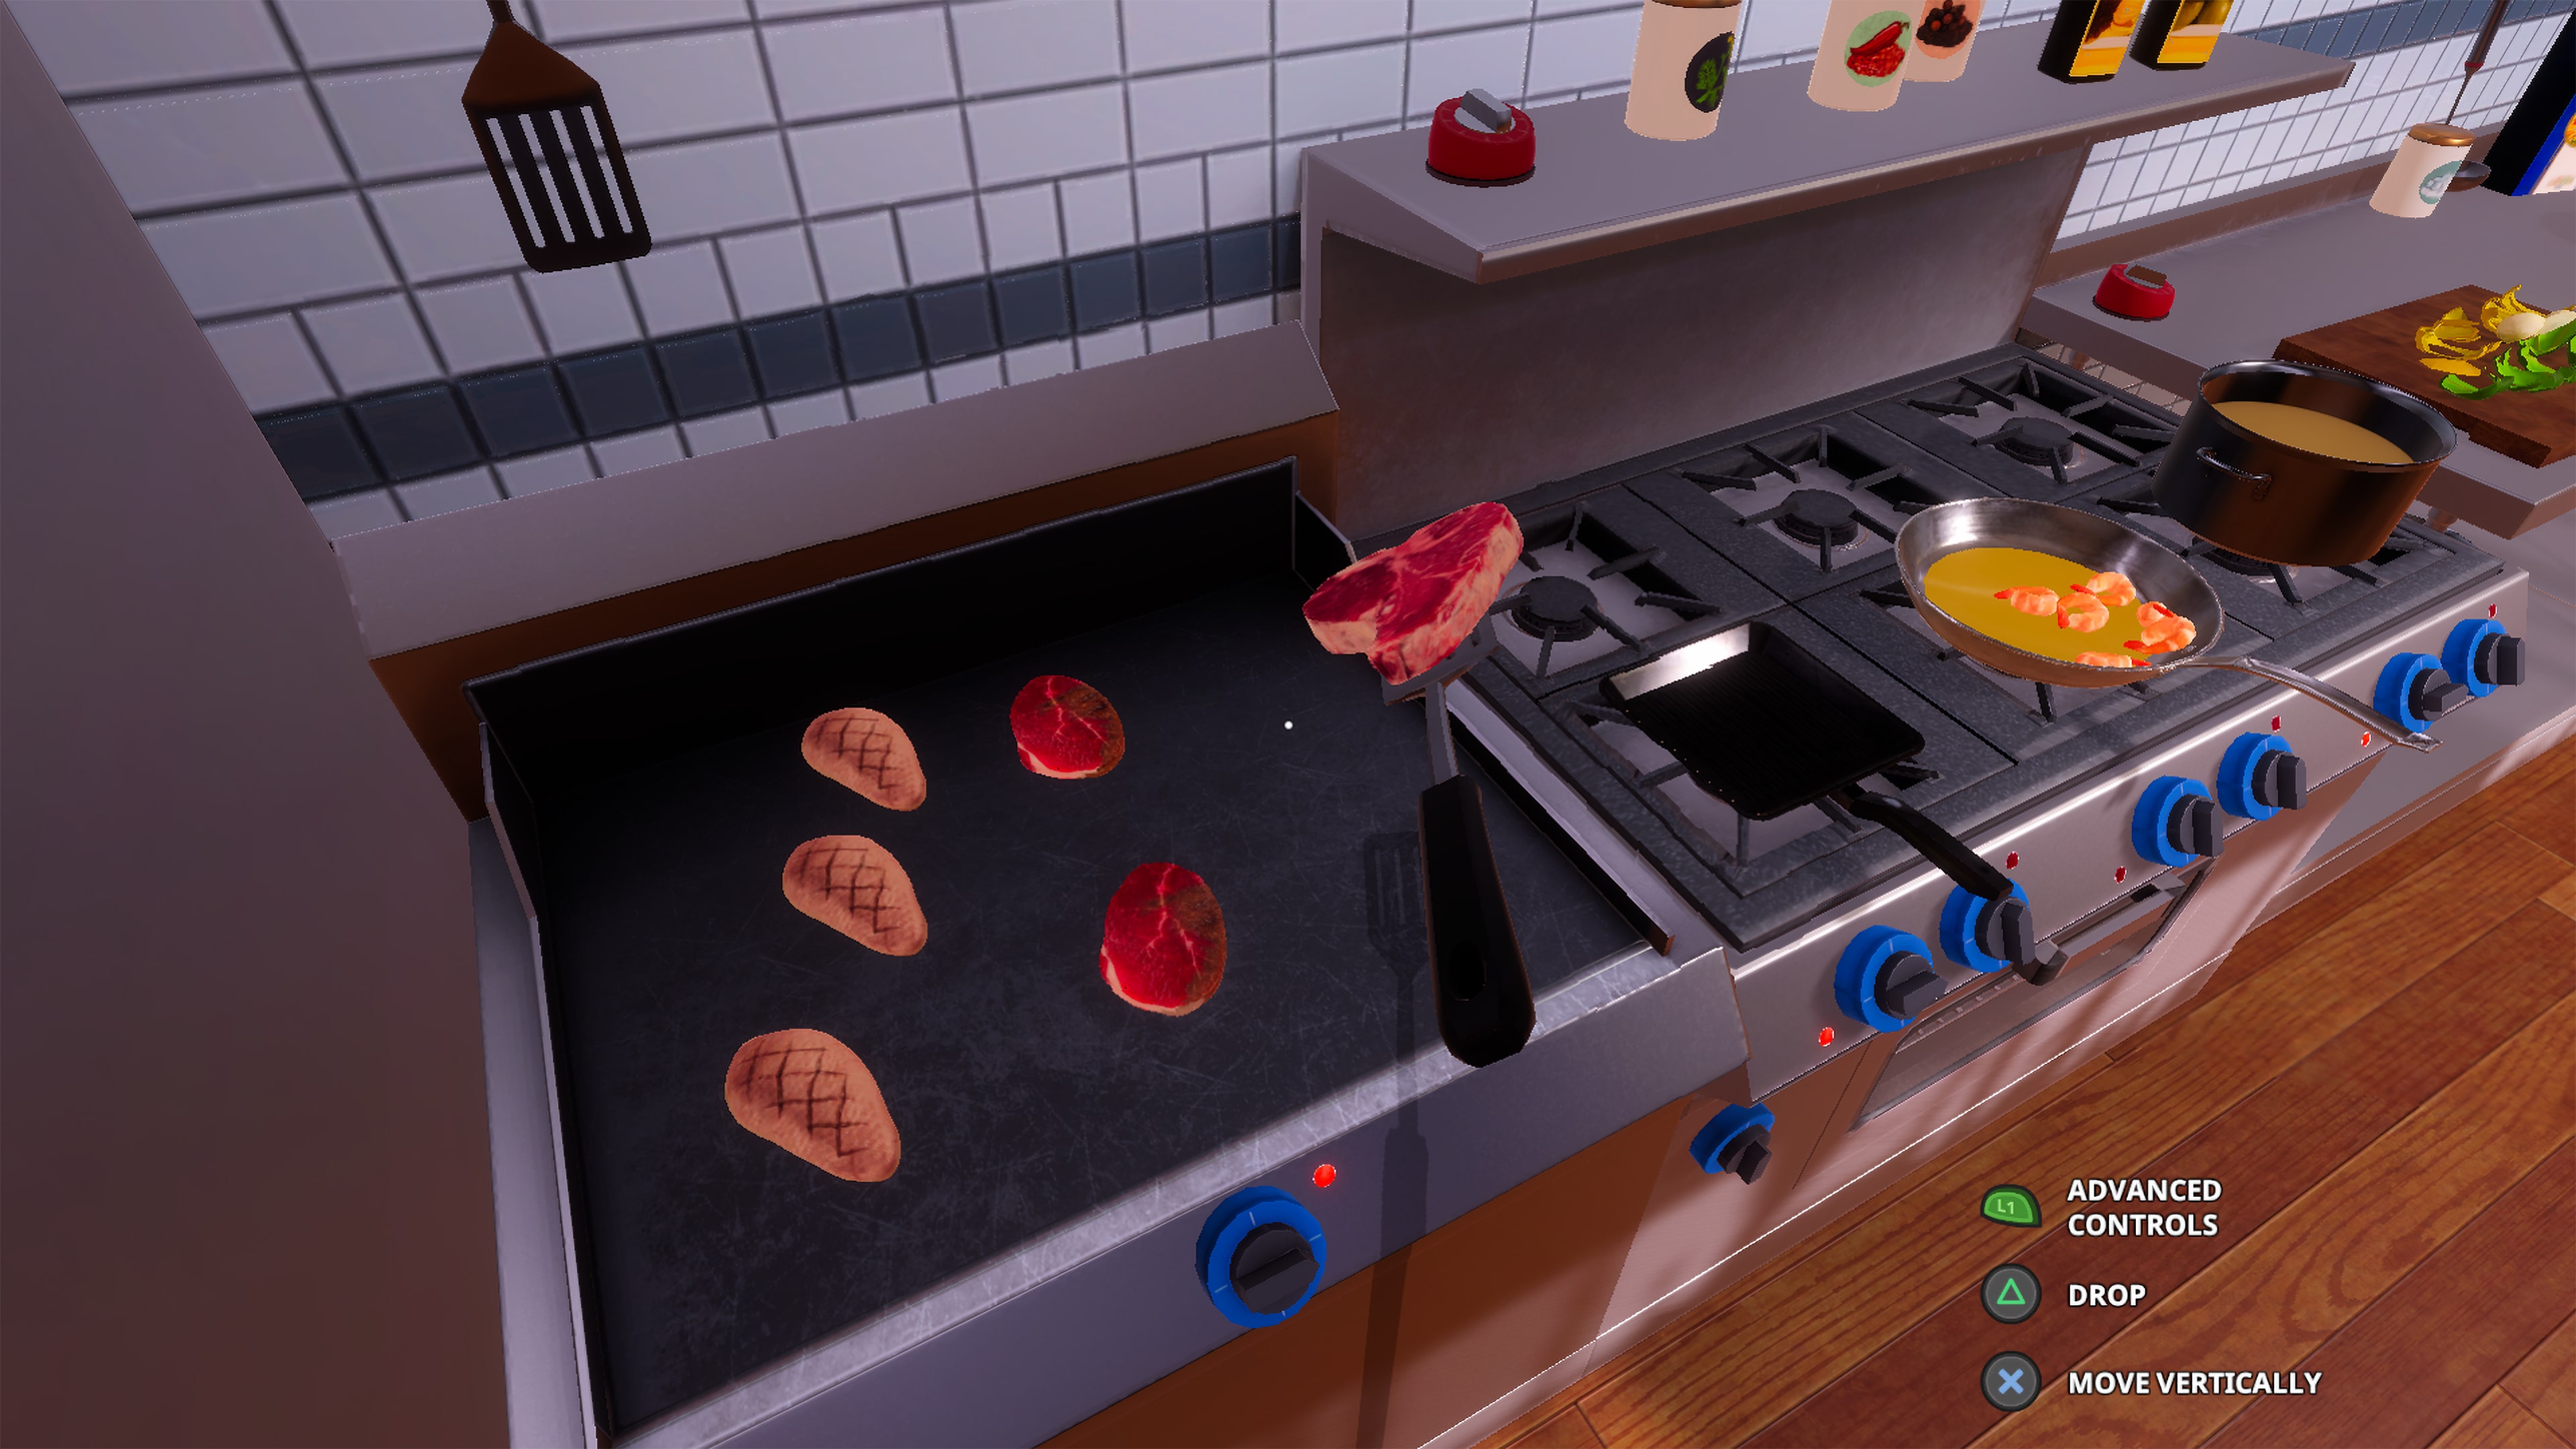 Cooking Simulator Pizza APK - Skyline Emulator Android